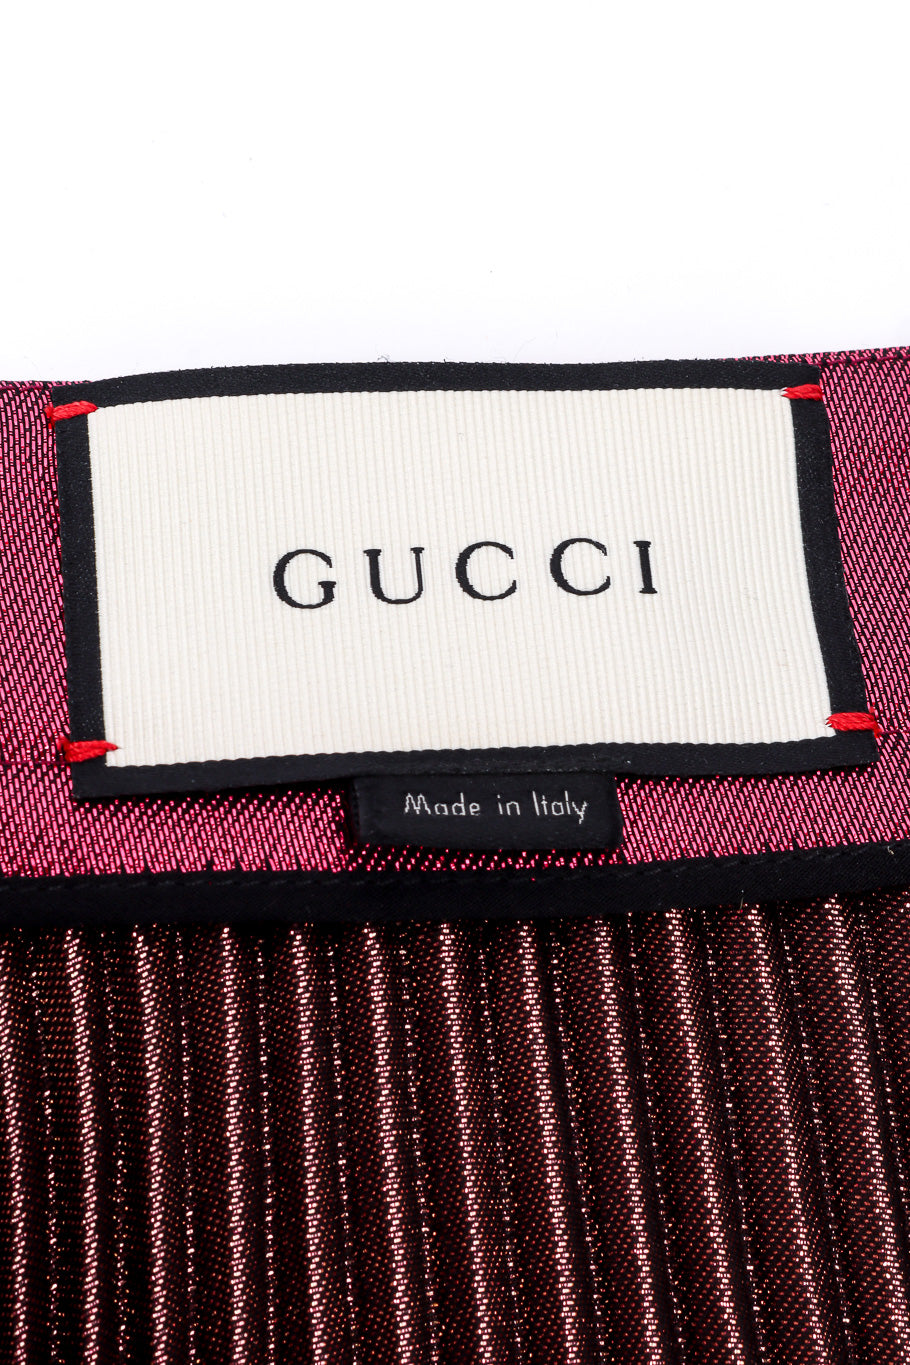 Gucci Metallic Accordion Pleat Skirt label closeup @Recessla